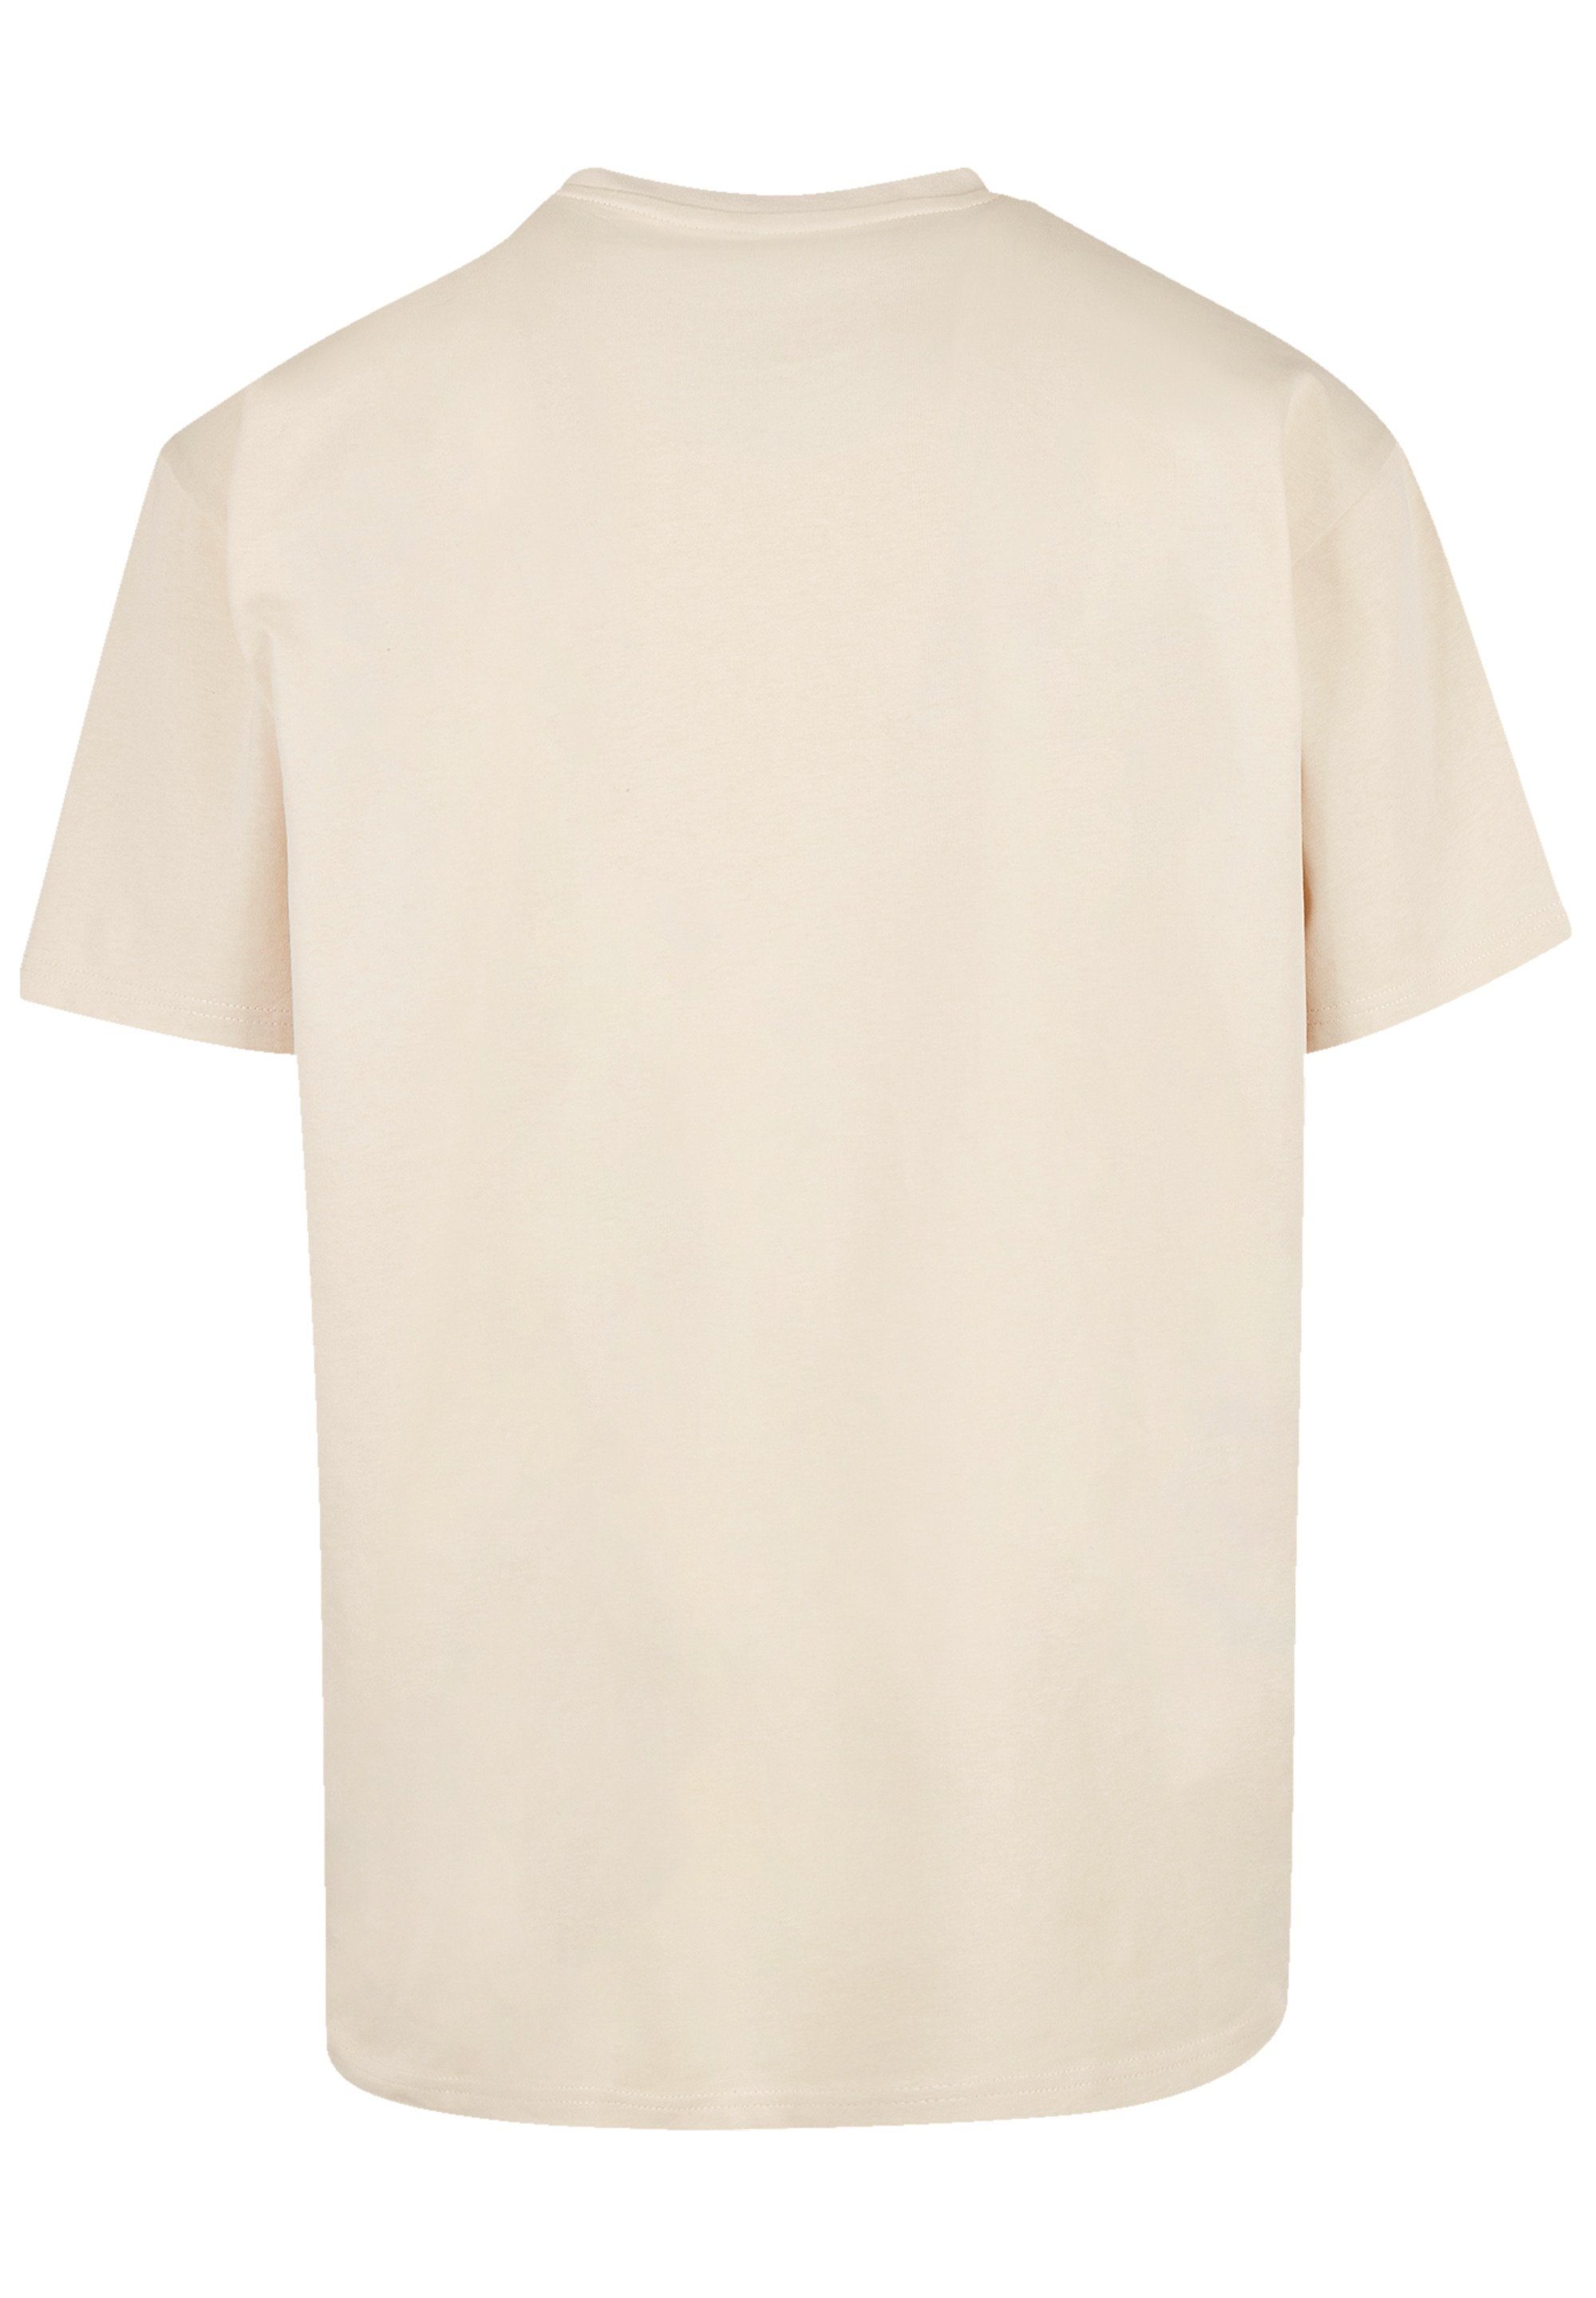 3D sand EPYX T-Shirt F4NT4STIC Print Logo